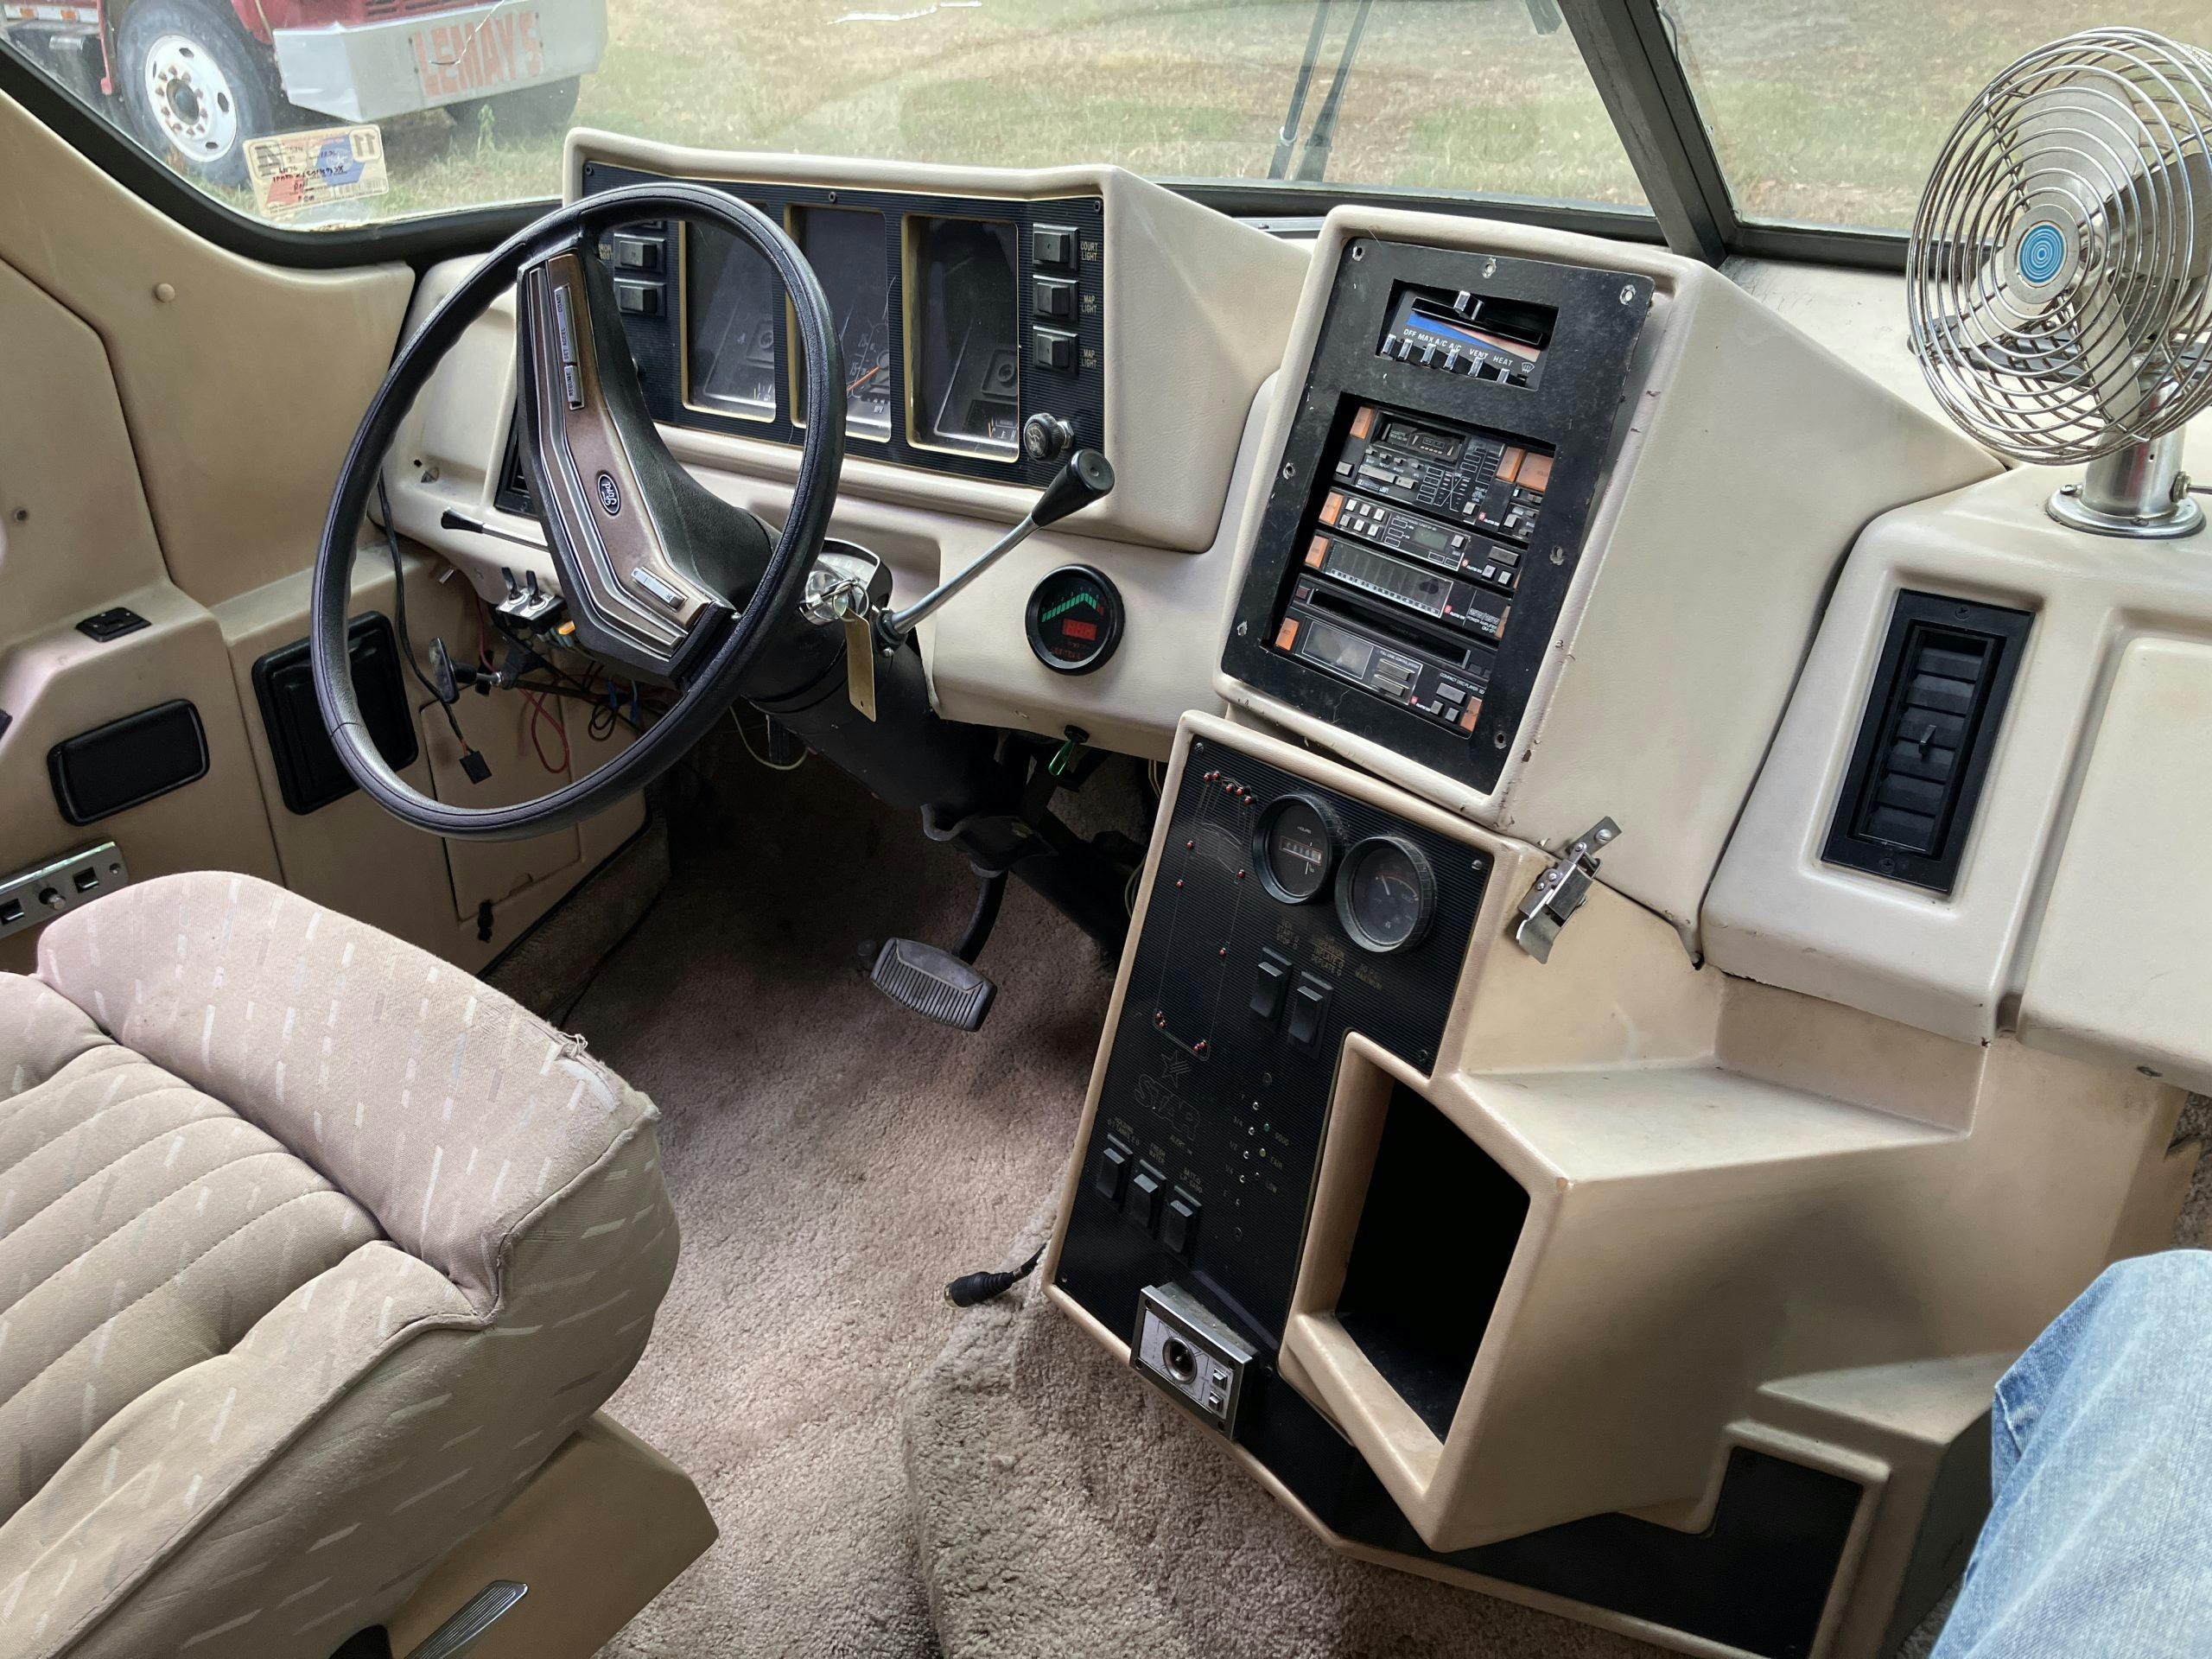 1987 EMC Eldorado Starfire RV interior angle